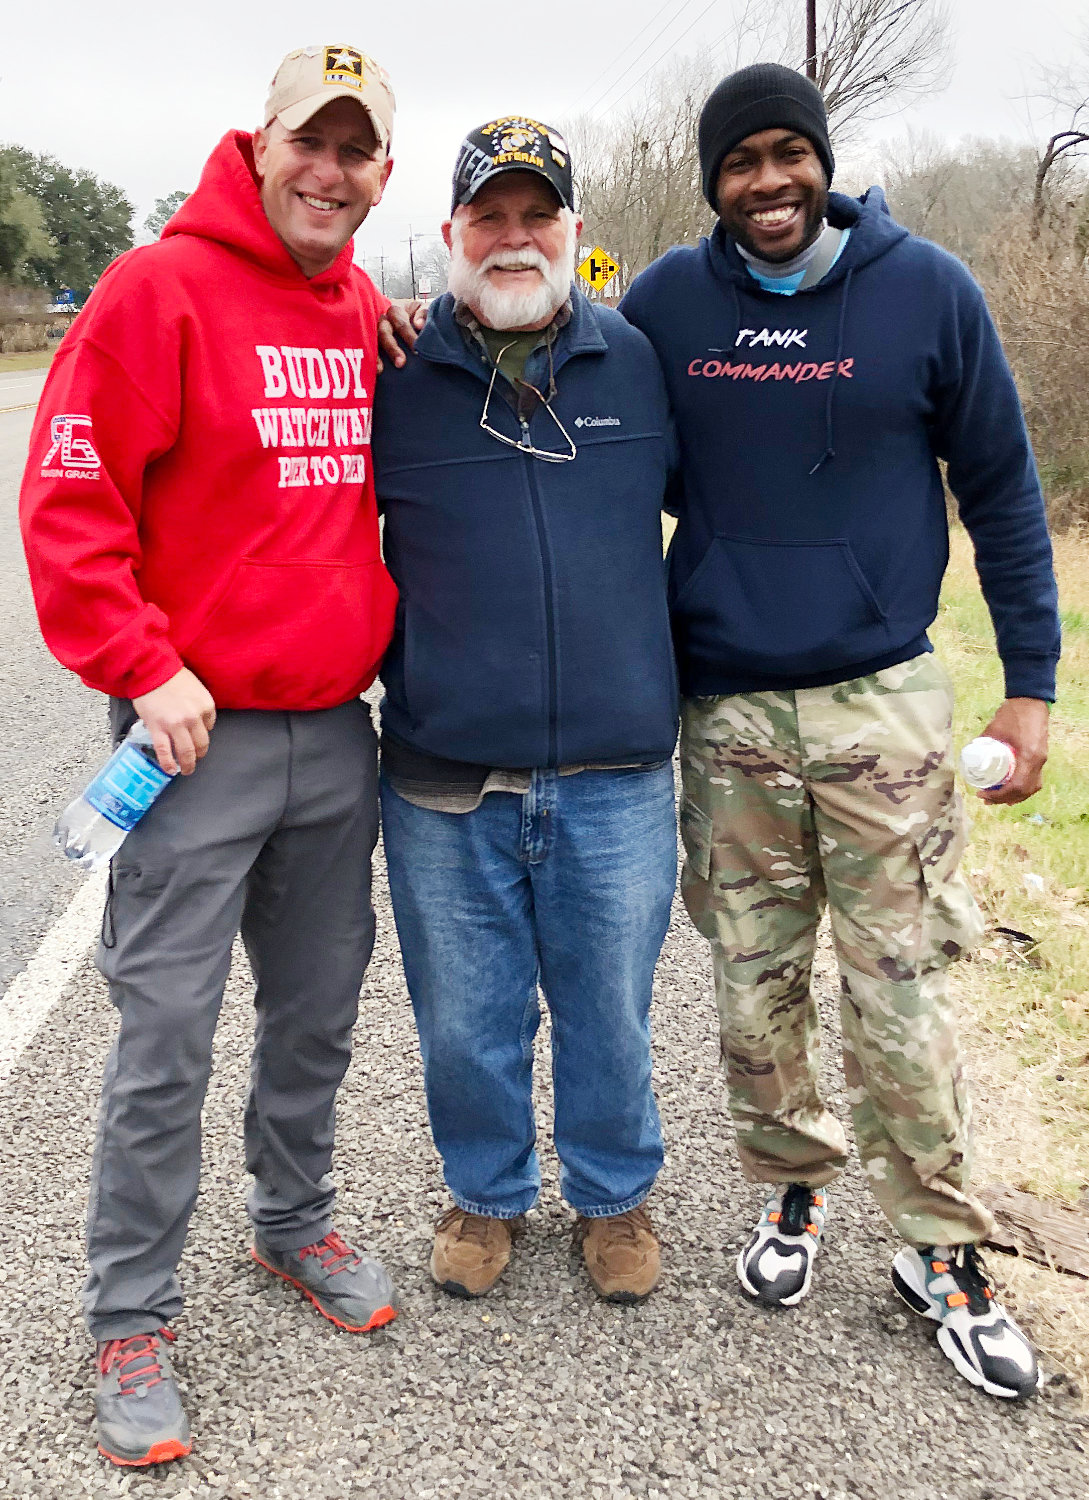 U.S. Marine Vietnam Veteran Jim Bailey joined John Ring and Jimmy Mathews of Buddy Watch Walk on their walk from Mineola to Grand Saline.